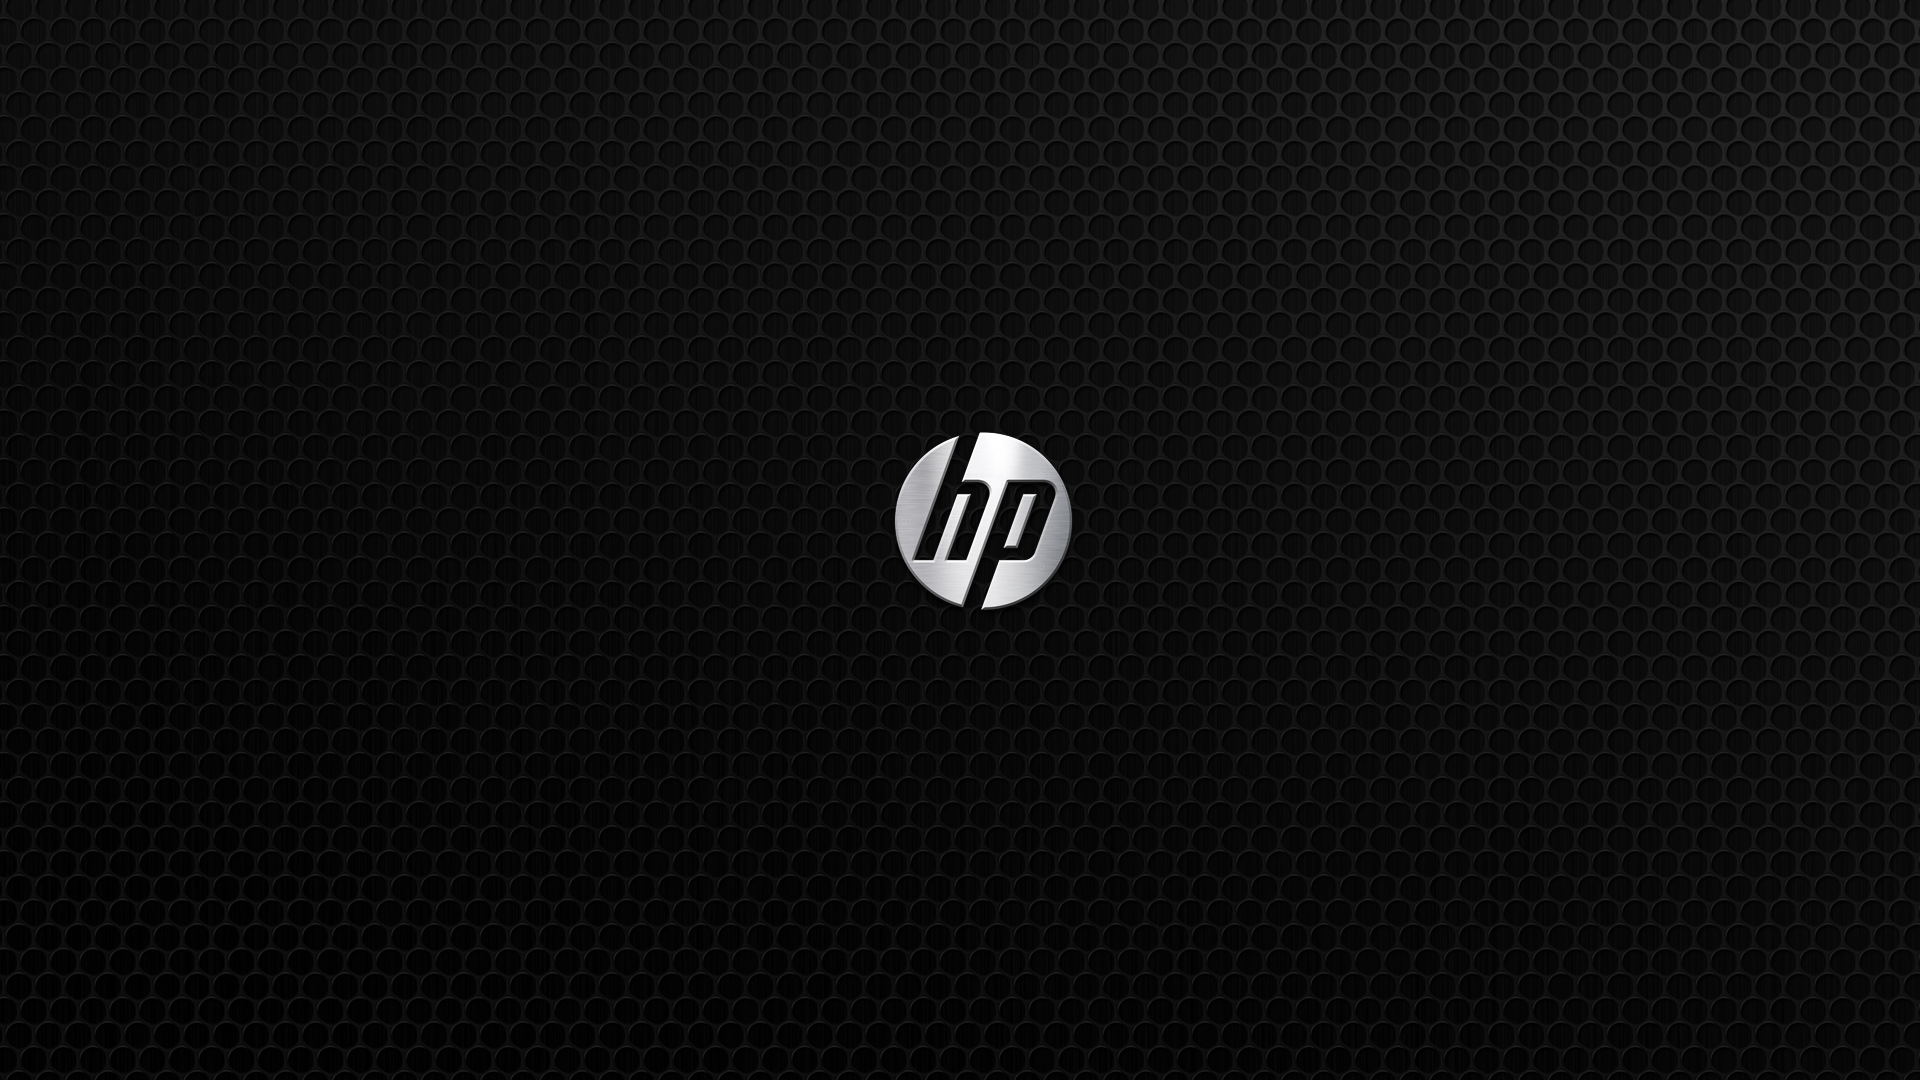 HP Logo Wallpaper   HD Wallpapers